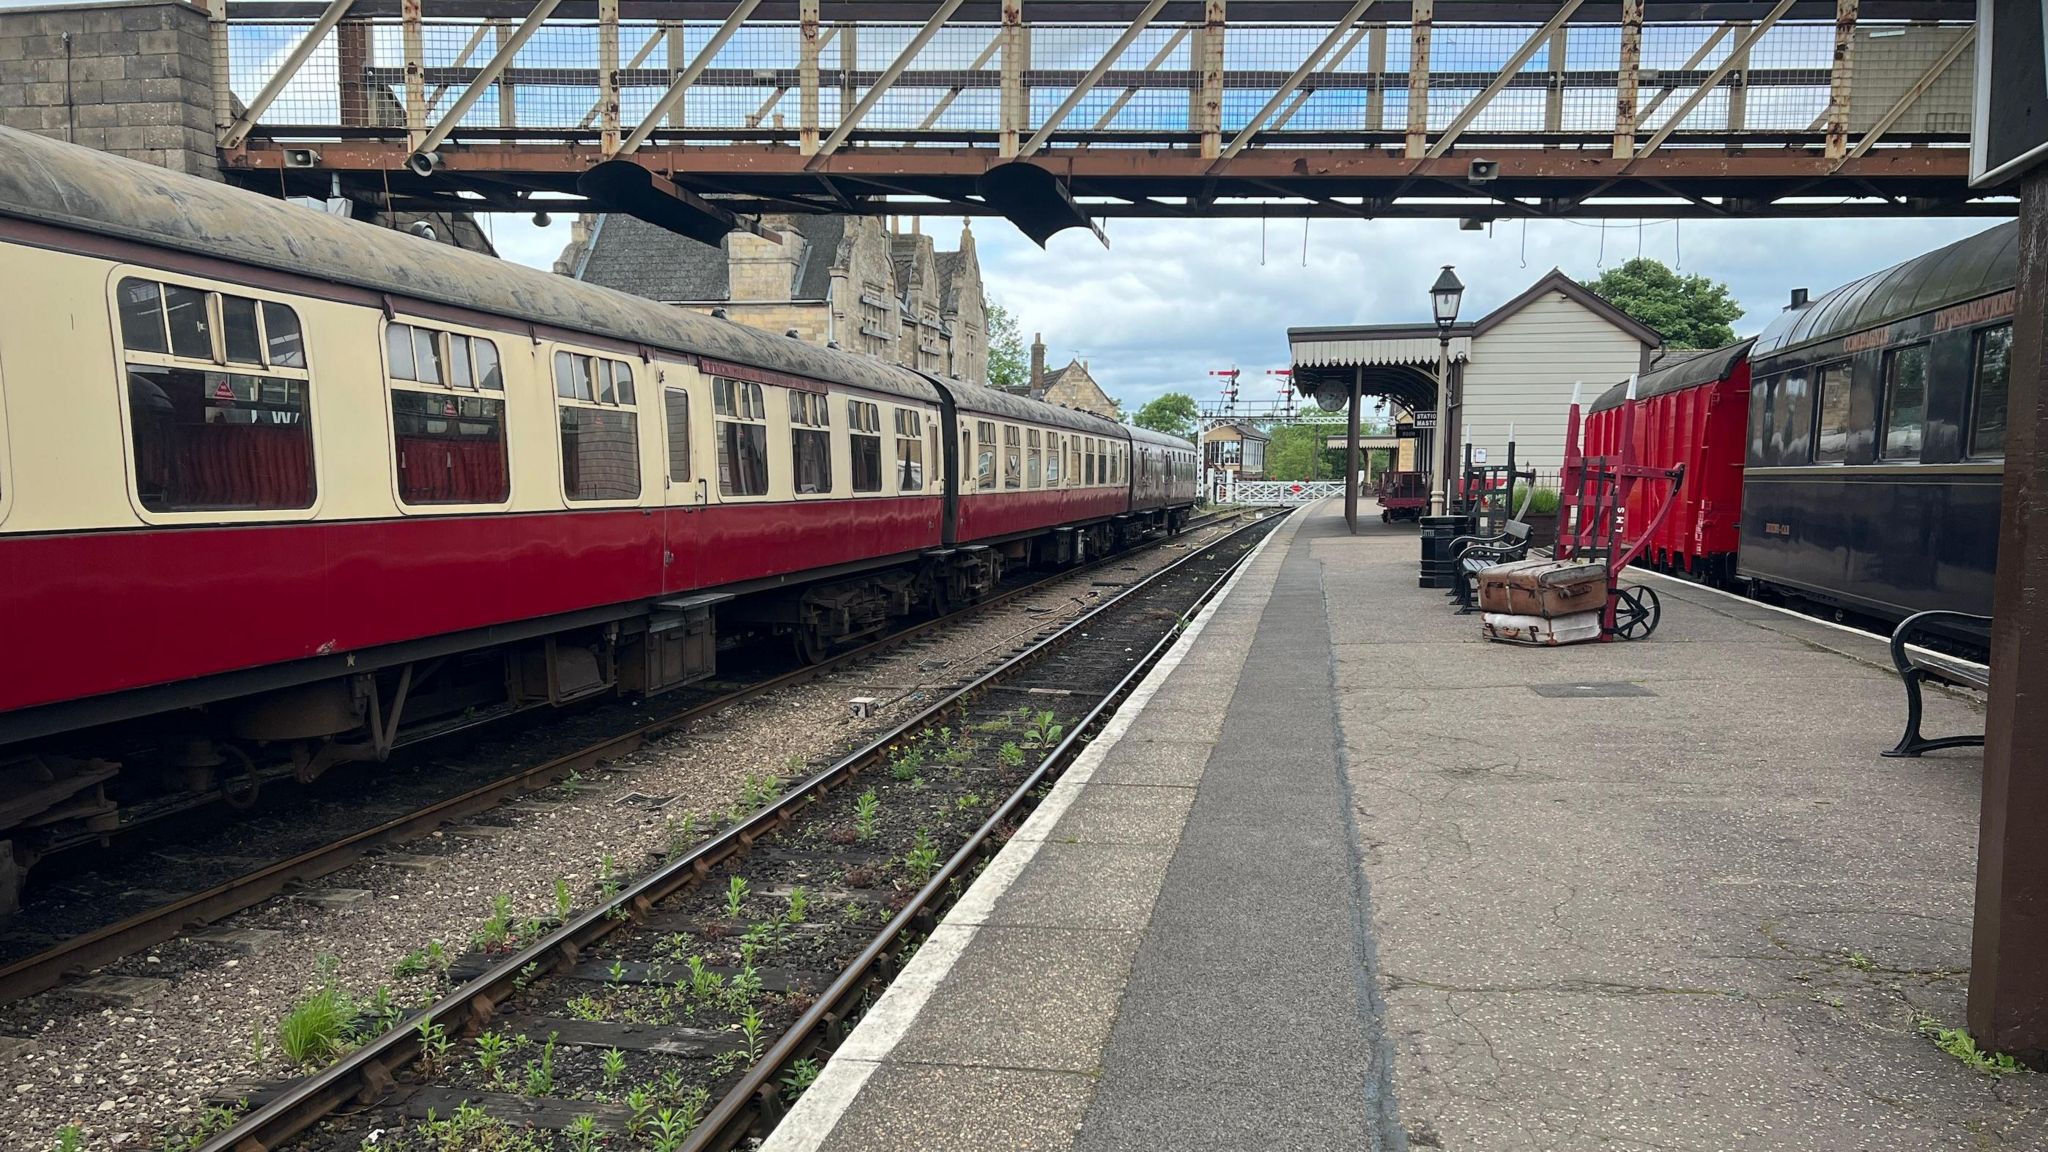 Platform at Wansford Station